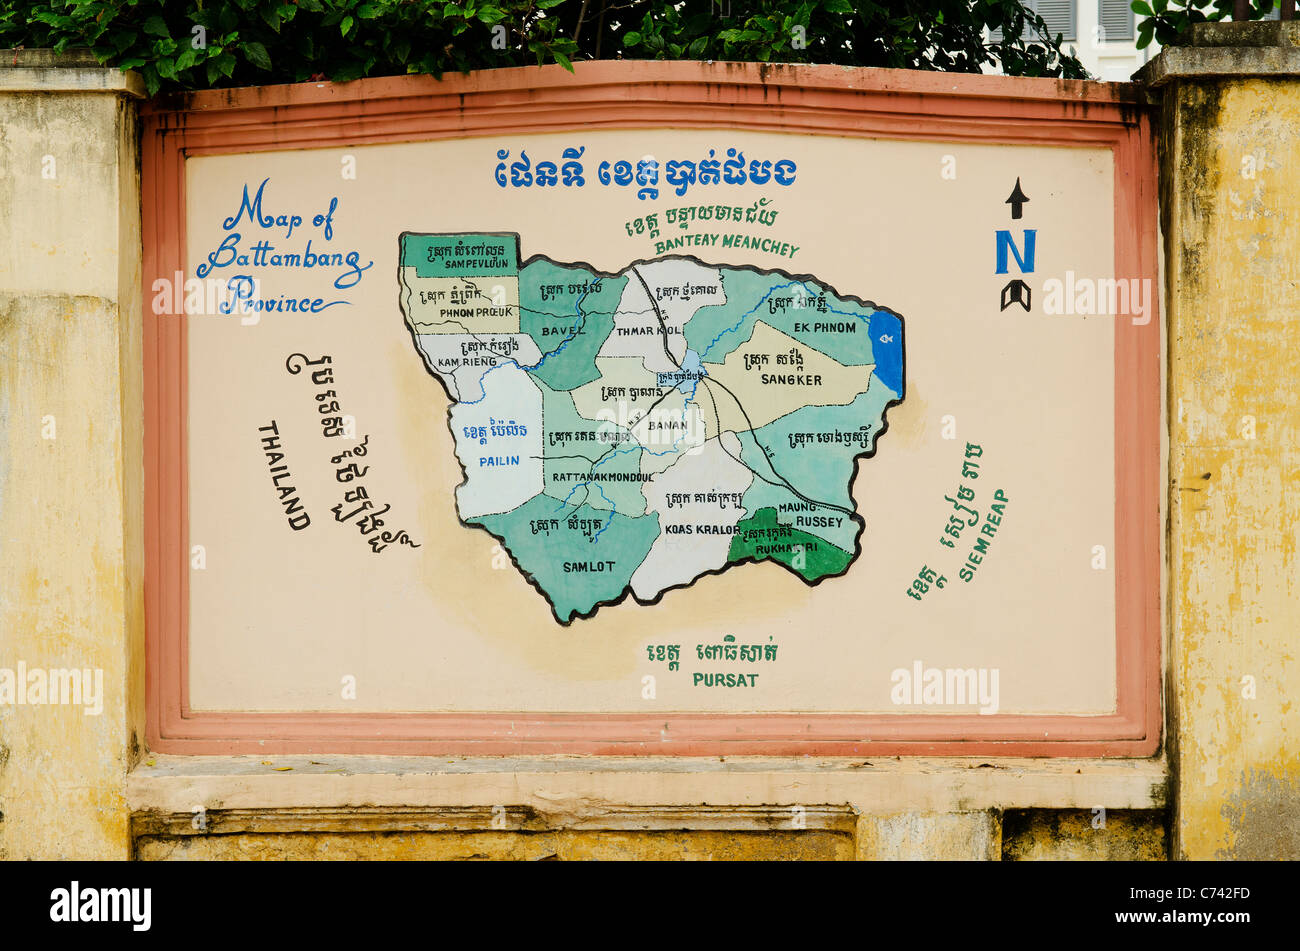 Map Of Battambang Province Cambodia C742FD 